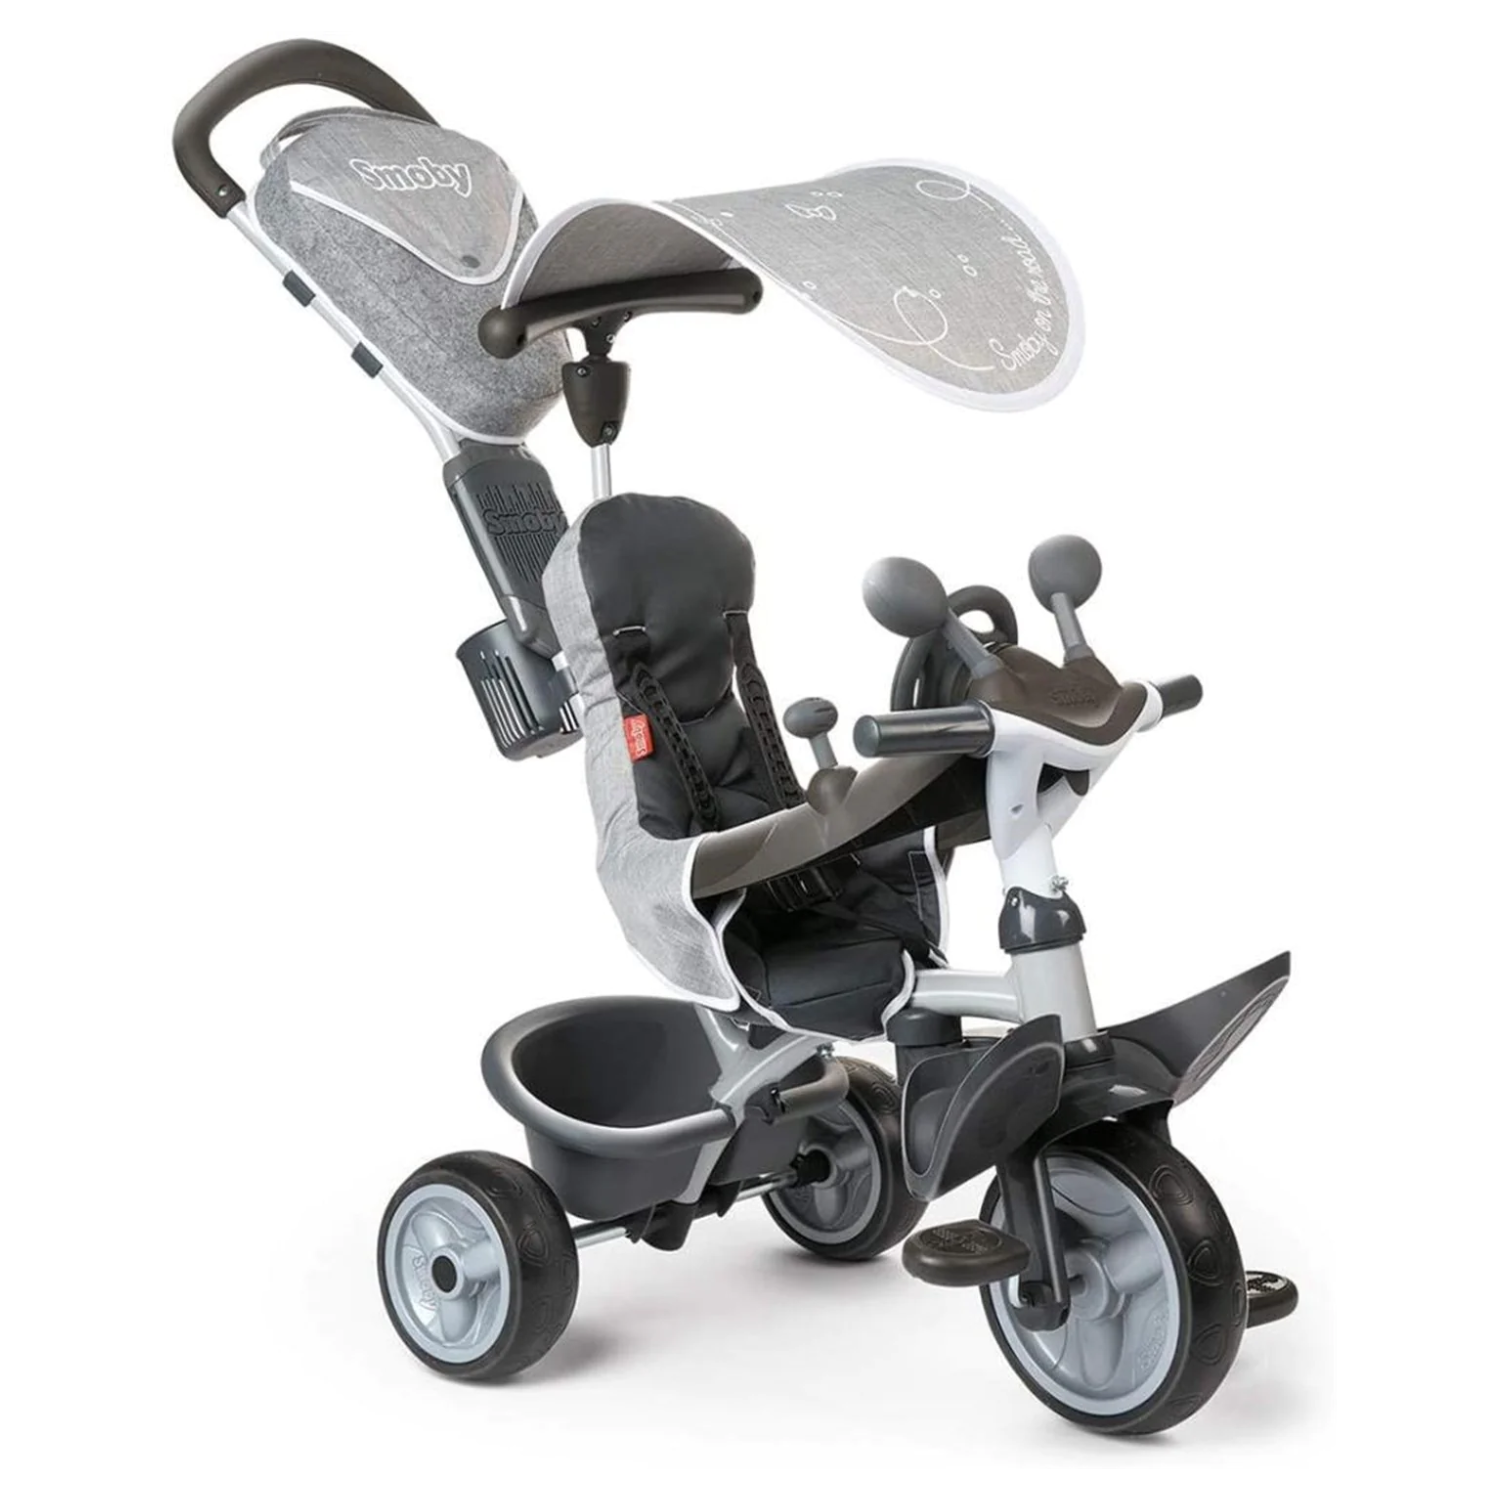 Smoby Baby Driver Comfort 3'ü1 arada Bisiklet Seti - Gri 741502 | Toysall